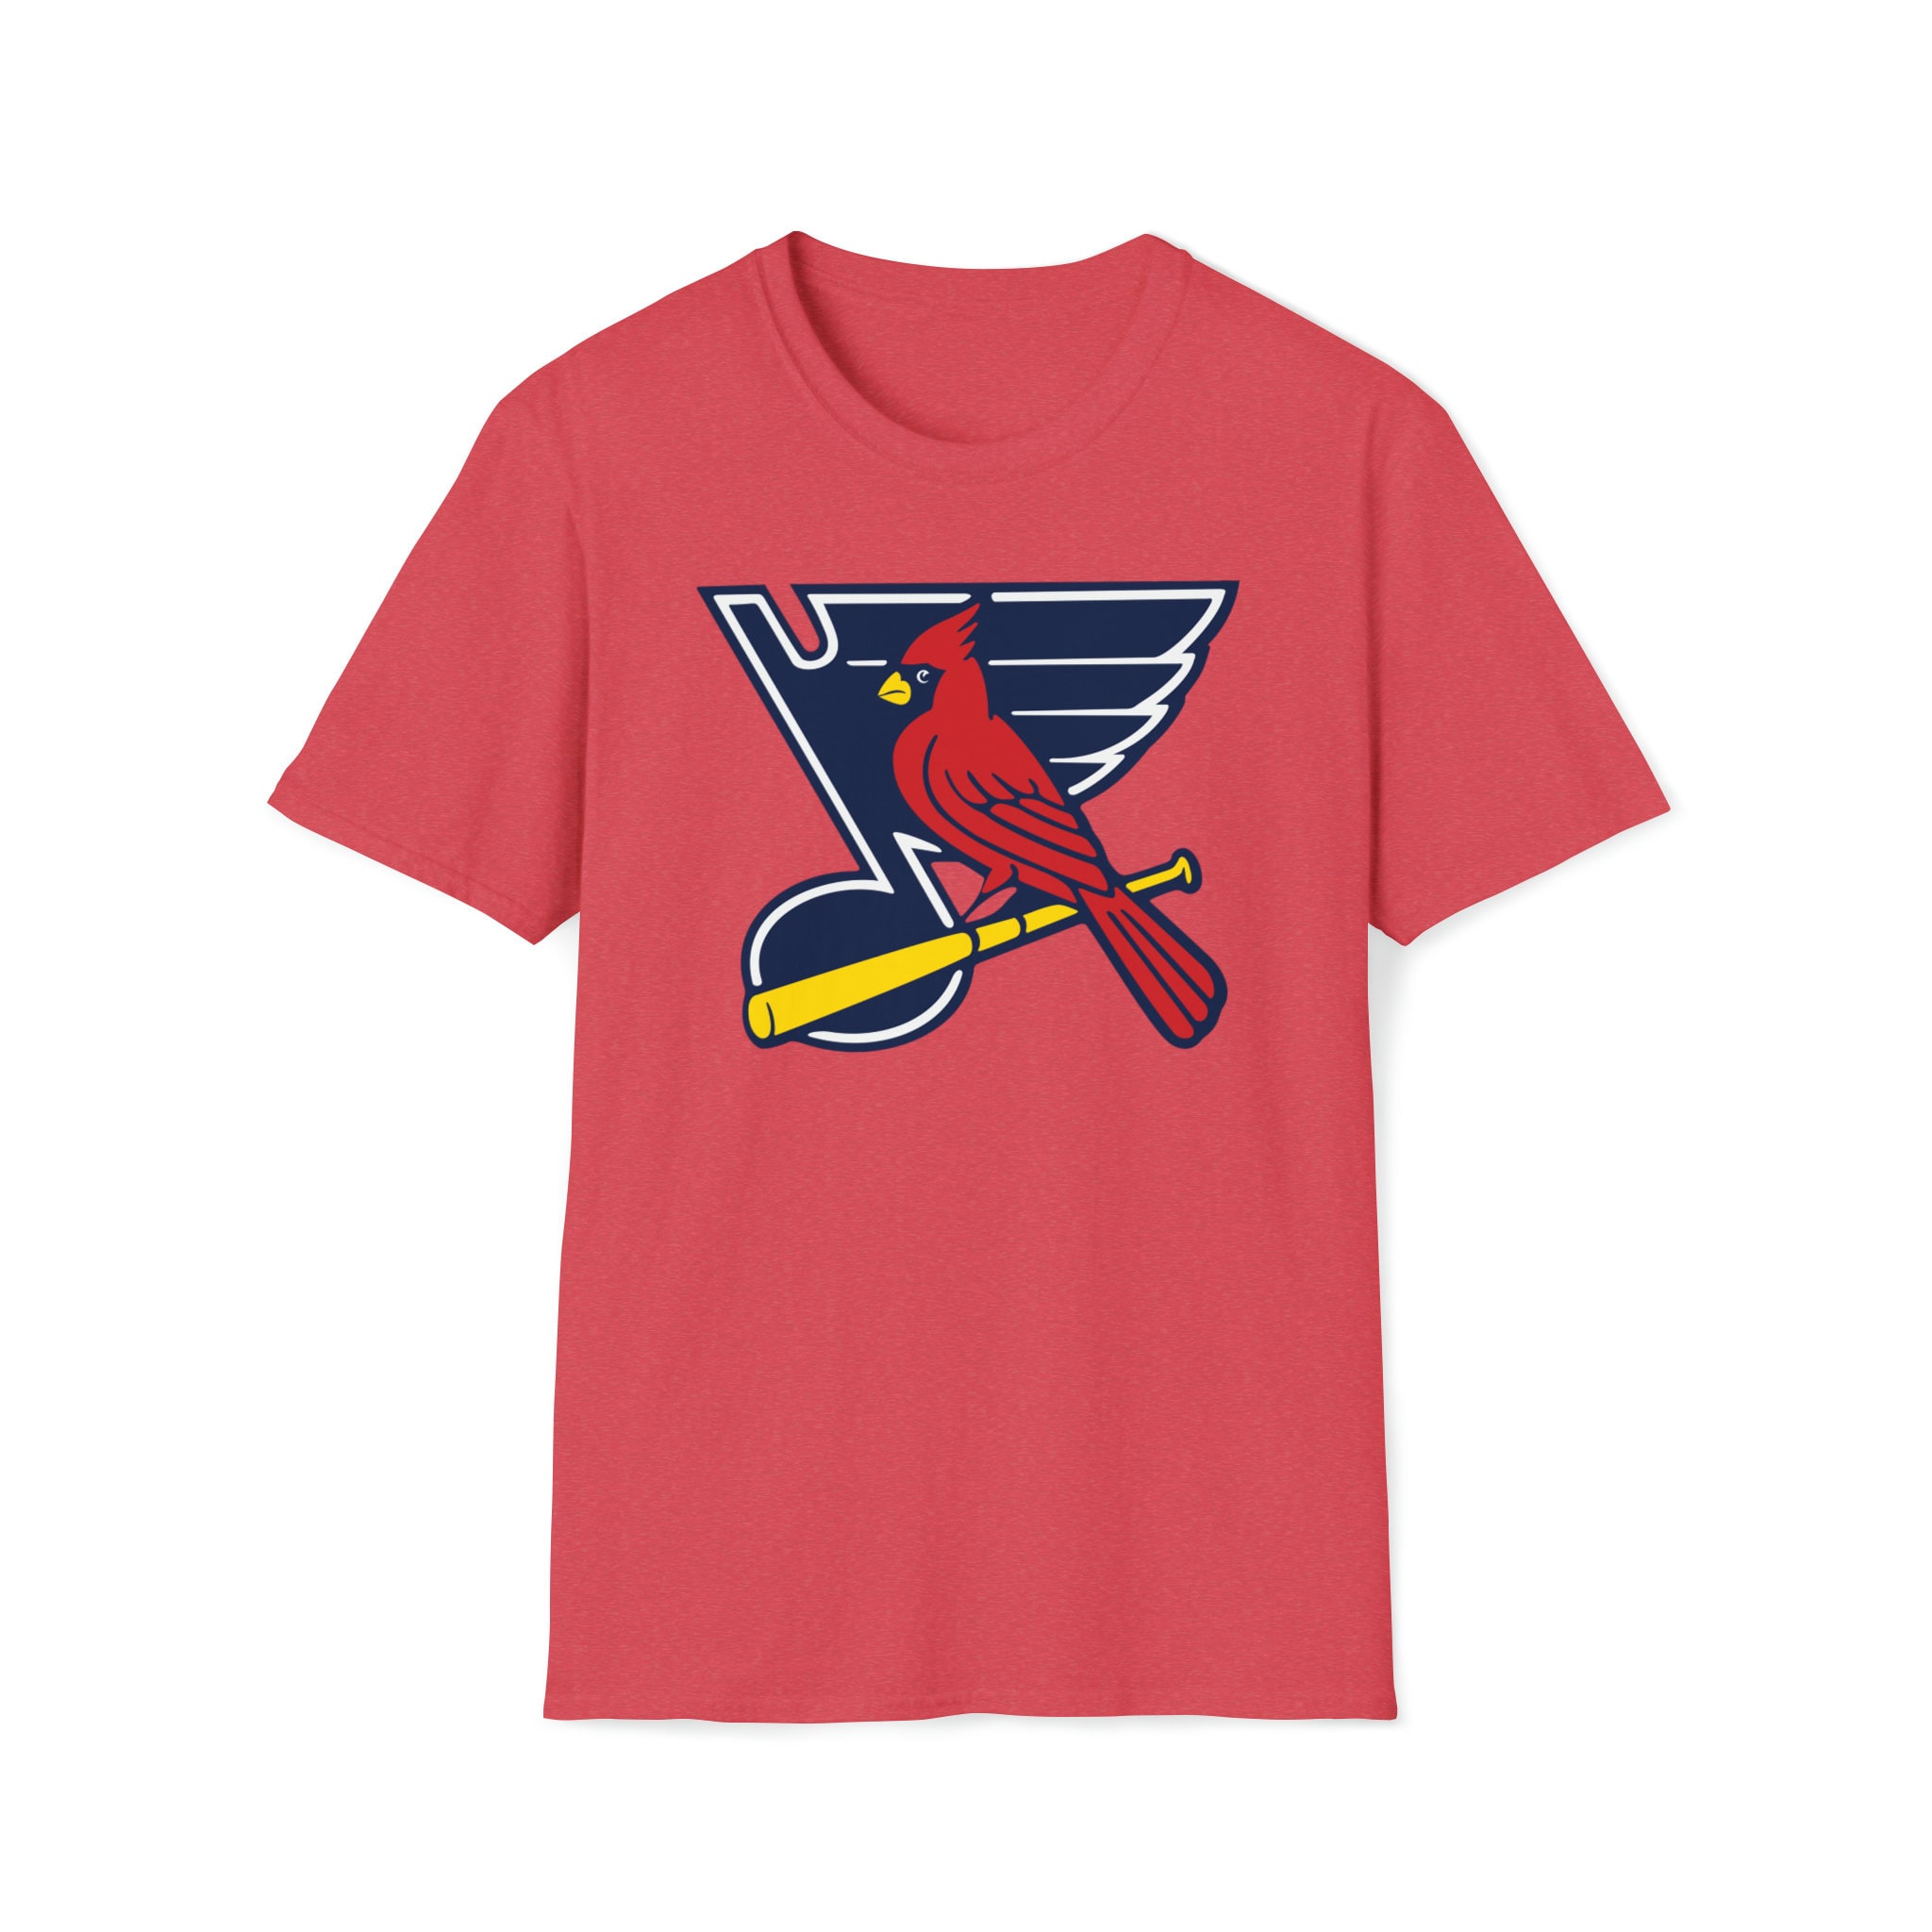 St Louis Blues T Shirt National Hockey League Adult XL Short